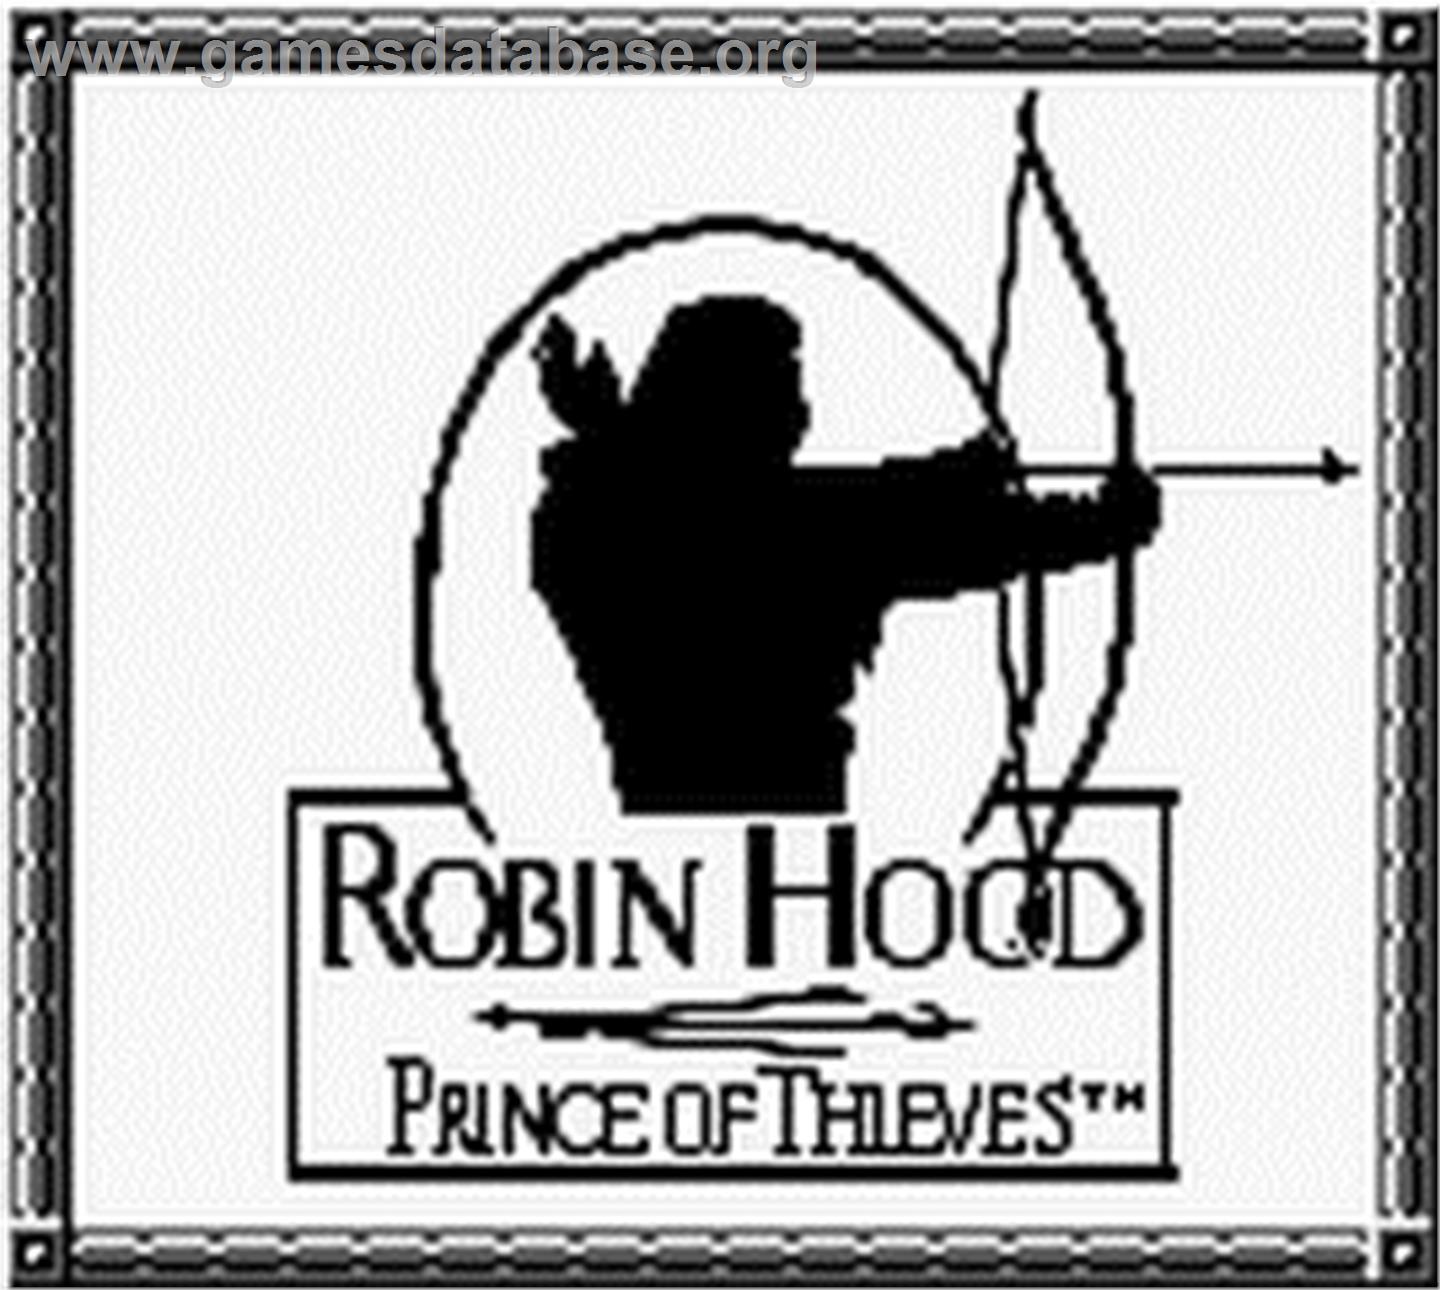 Robin Hood: Prince of Thieves - Nintendo Game Boy - Artwork - Title Screen